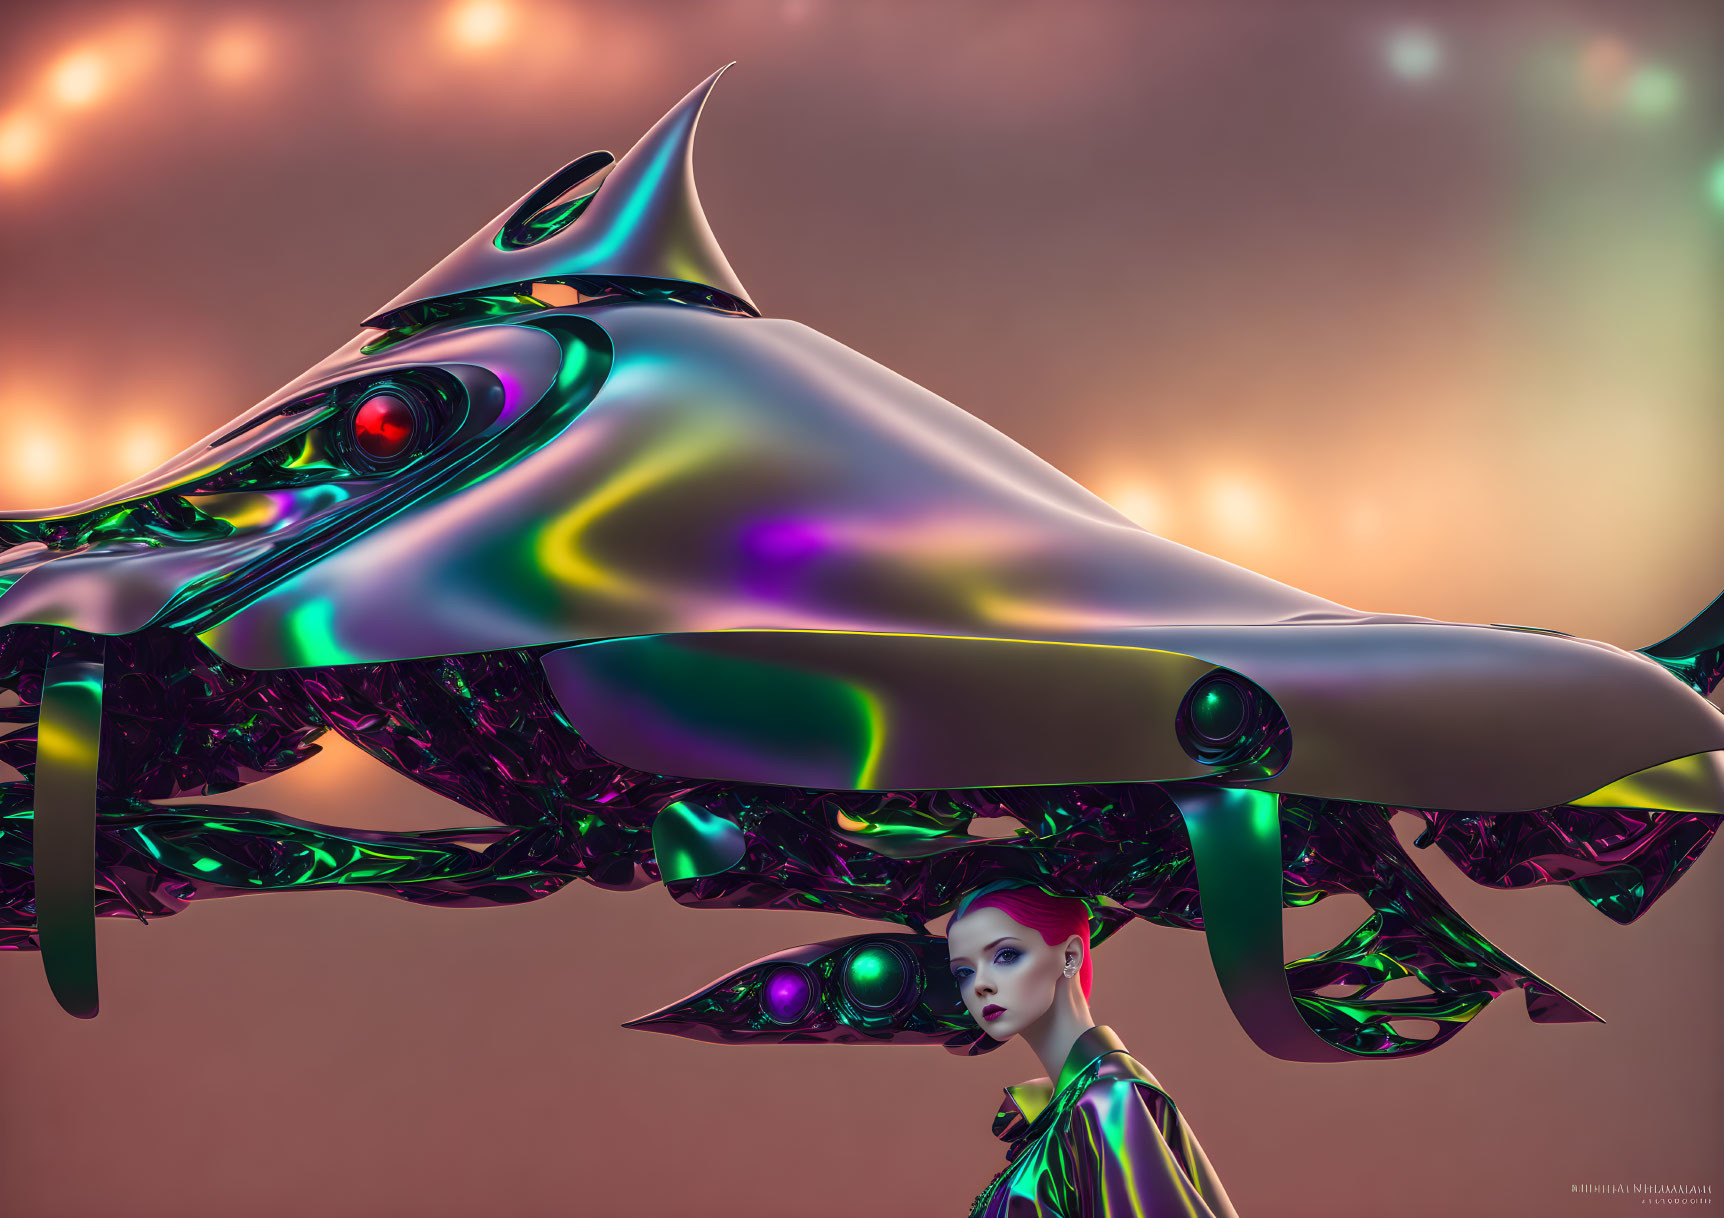 Futuristic image of person with metallic skin under iridescent spacecraft structure